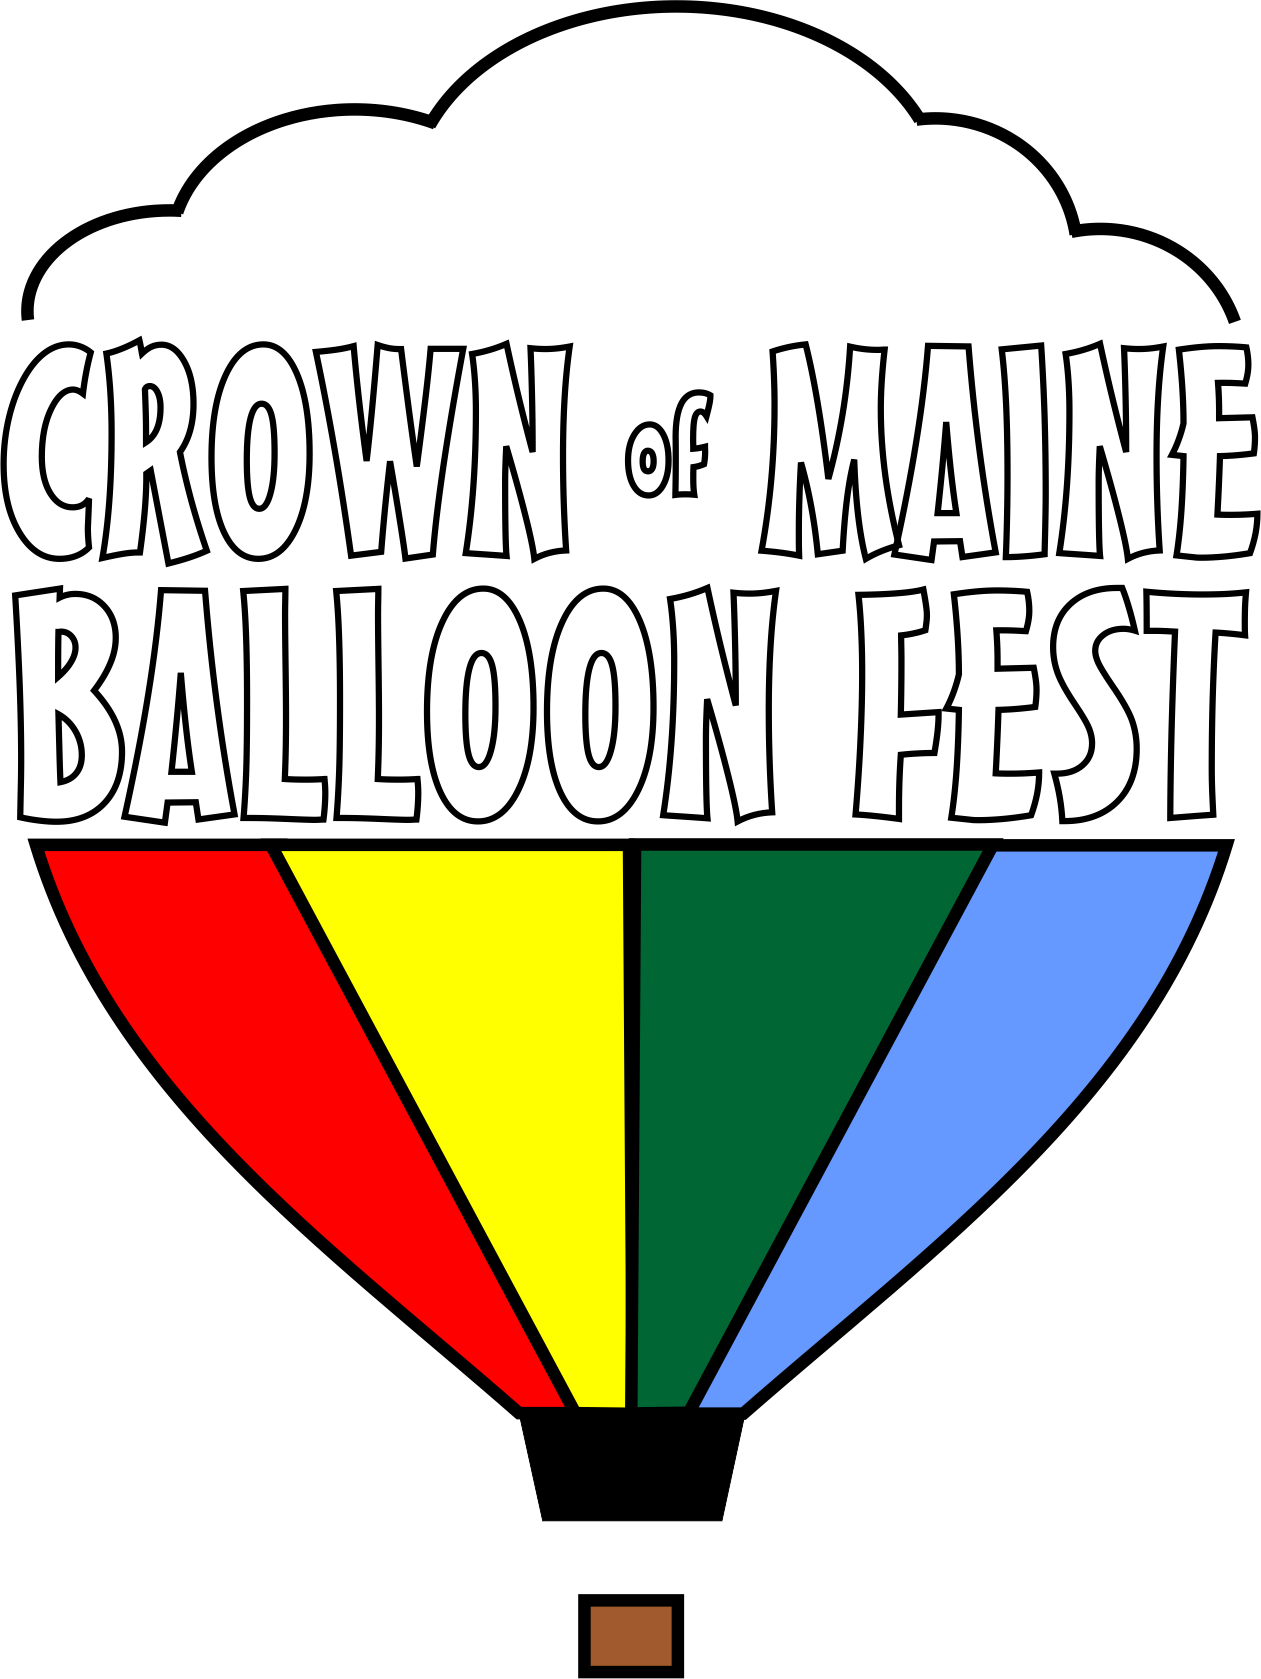 Crown of Maine Balloon Fest